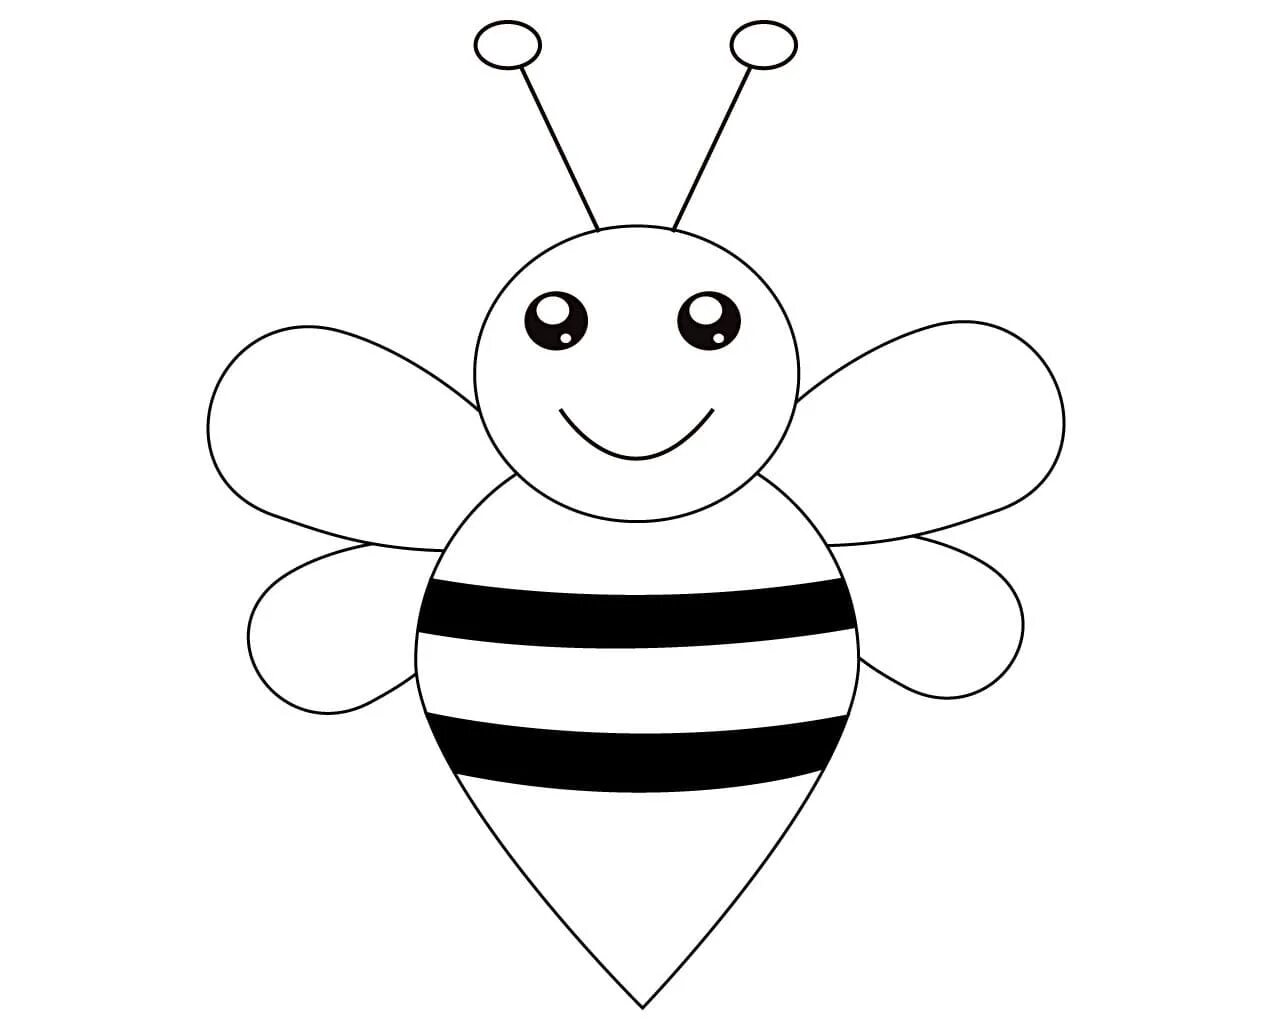 Пчела раскраска. Пчела раскраска для детей. Раскраска пчёлка для детей. Пчелка раскраска для малышей. Раскраска пчела для детей